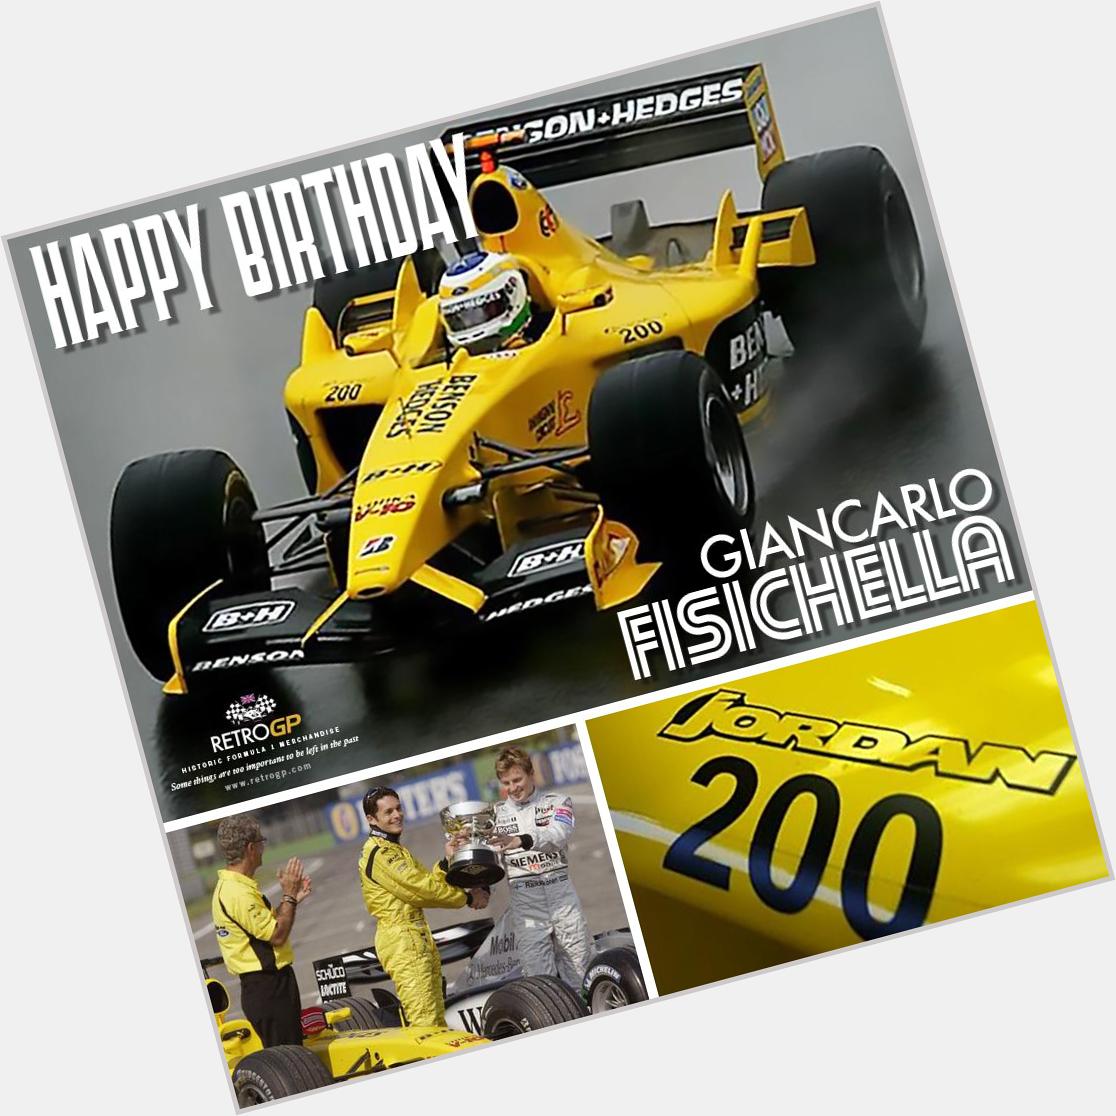 Happy Birthday to Giancarlo Fisichella who turns 42 today 